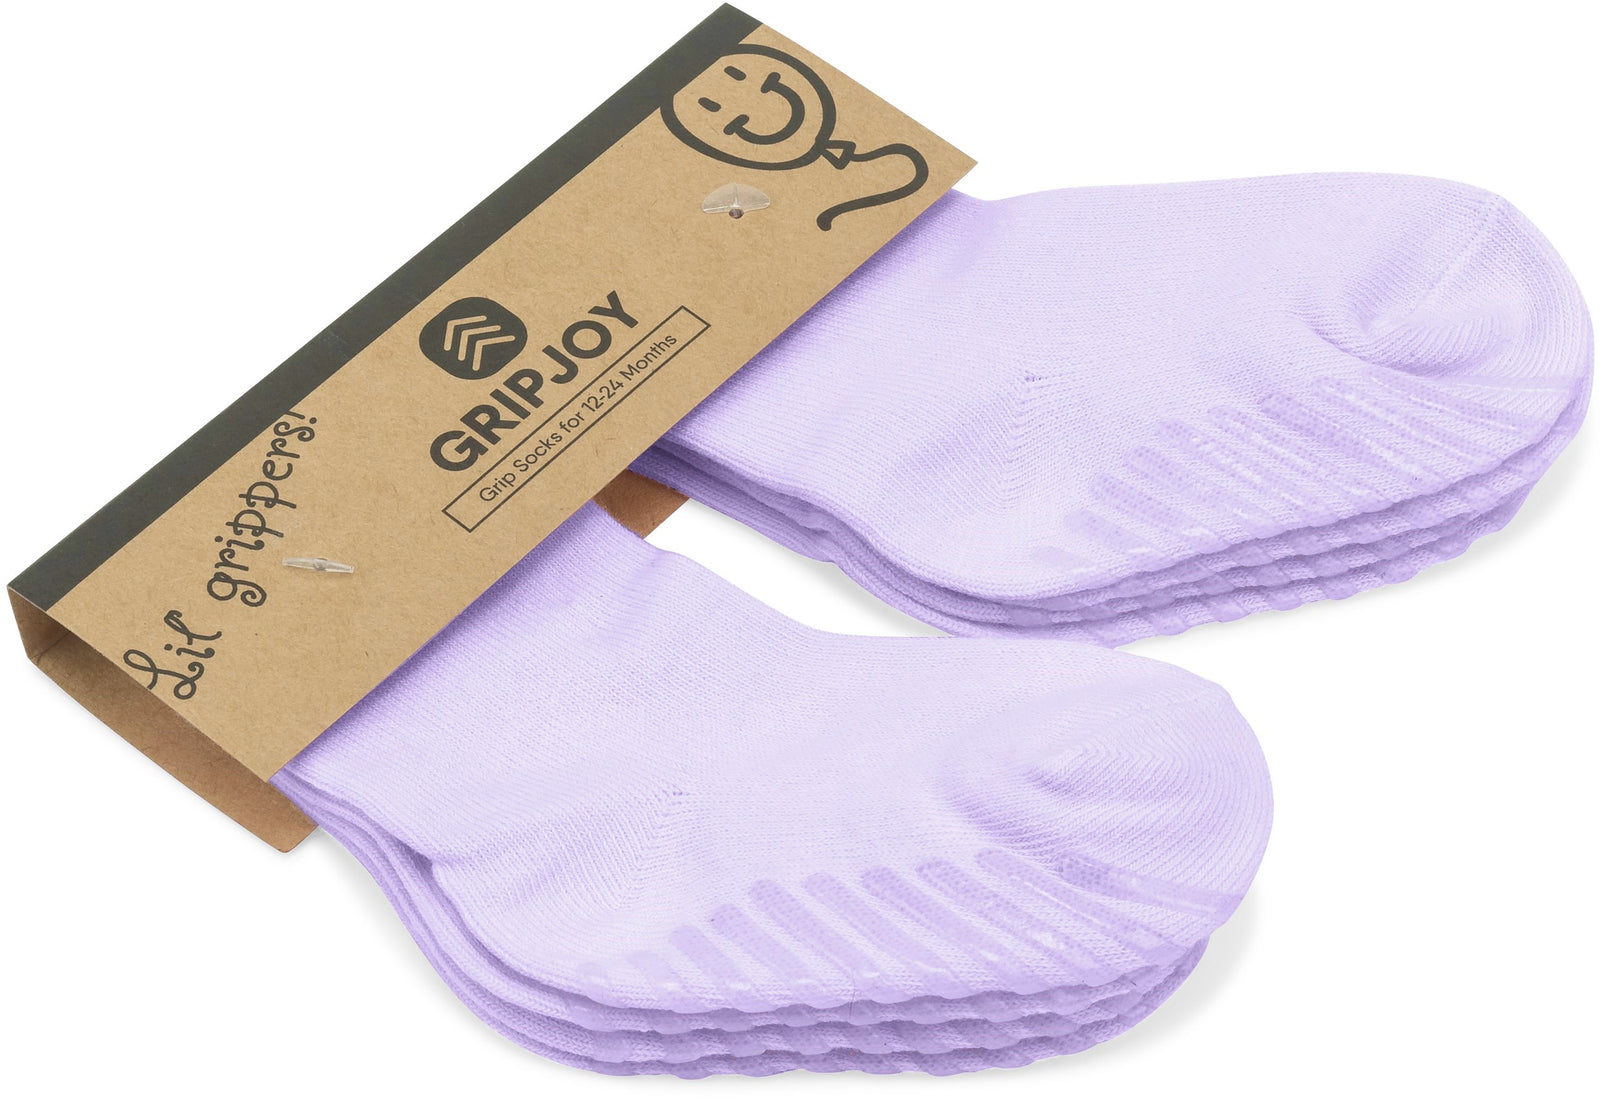 Pink Grip Socks for Toddlers & Kids - 4 pairs - Gripjoy Socks